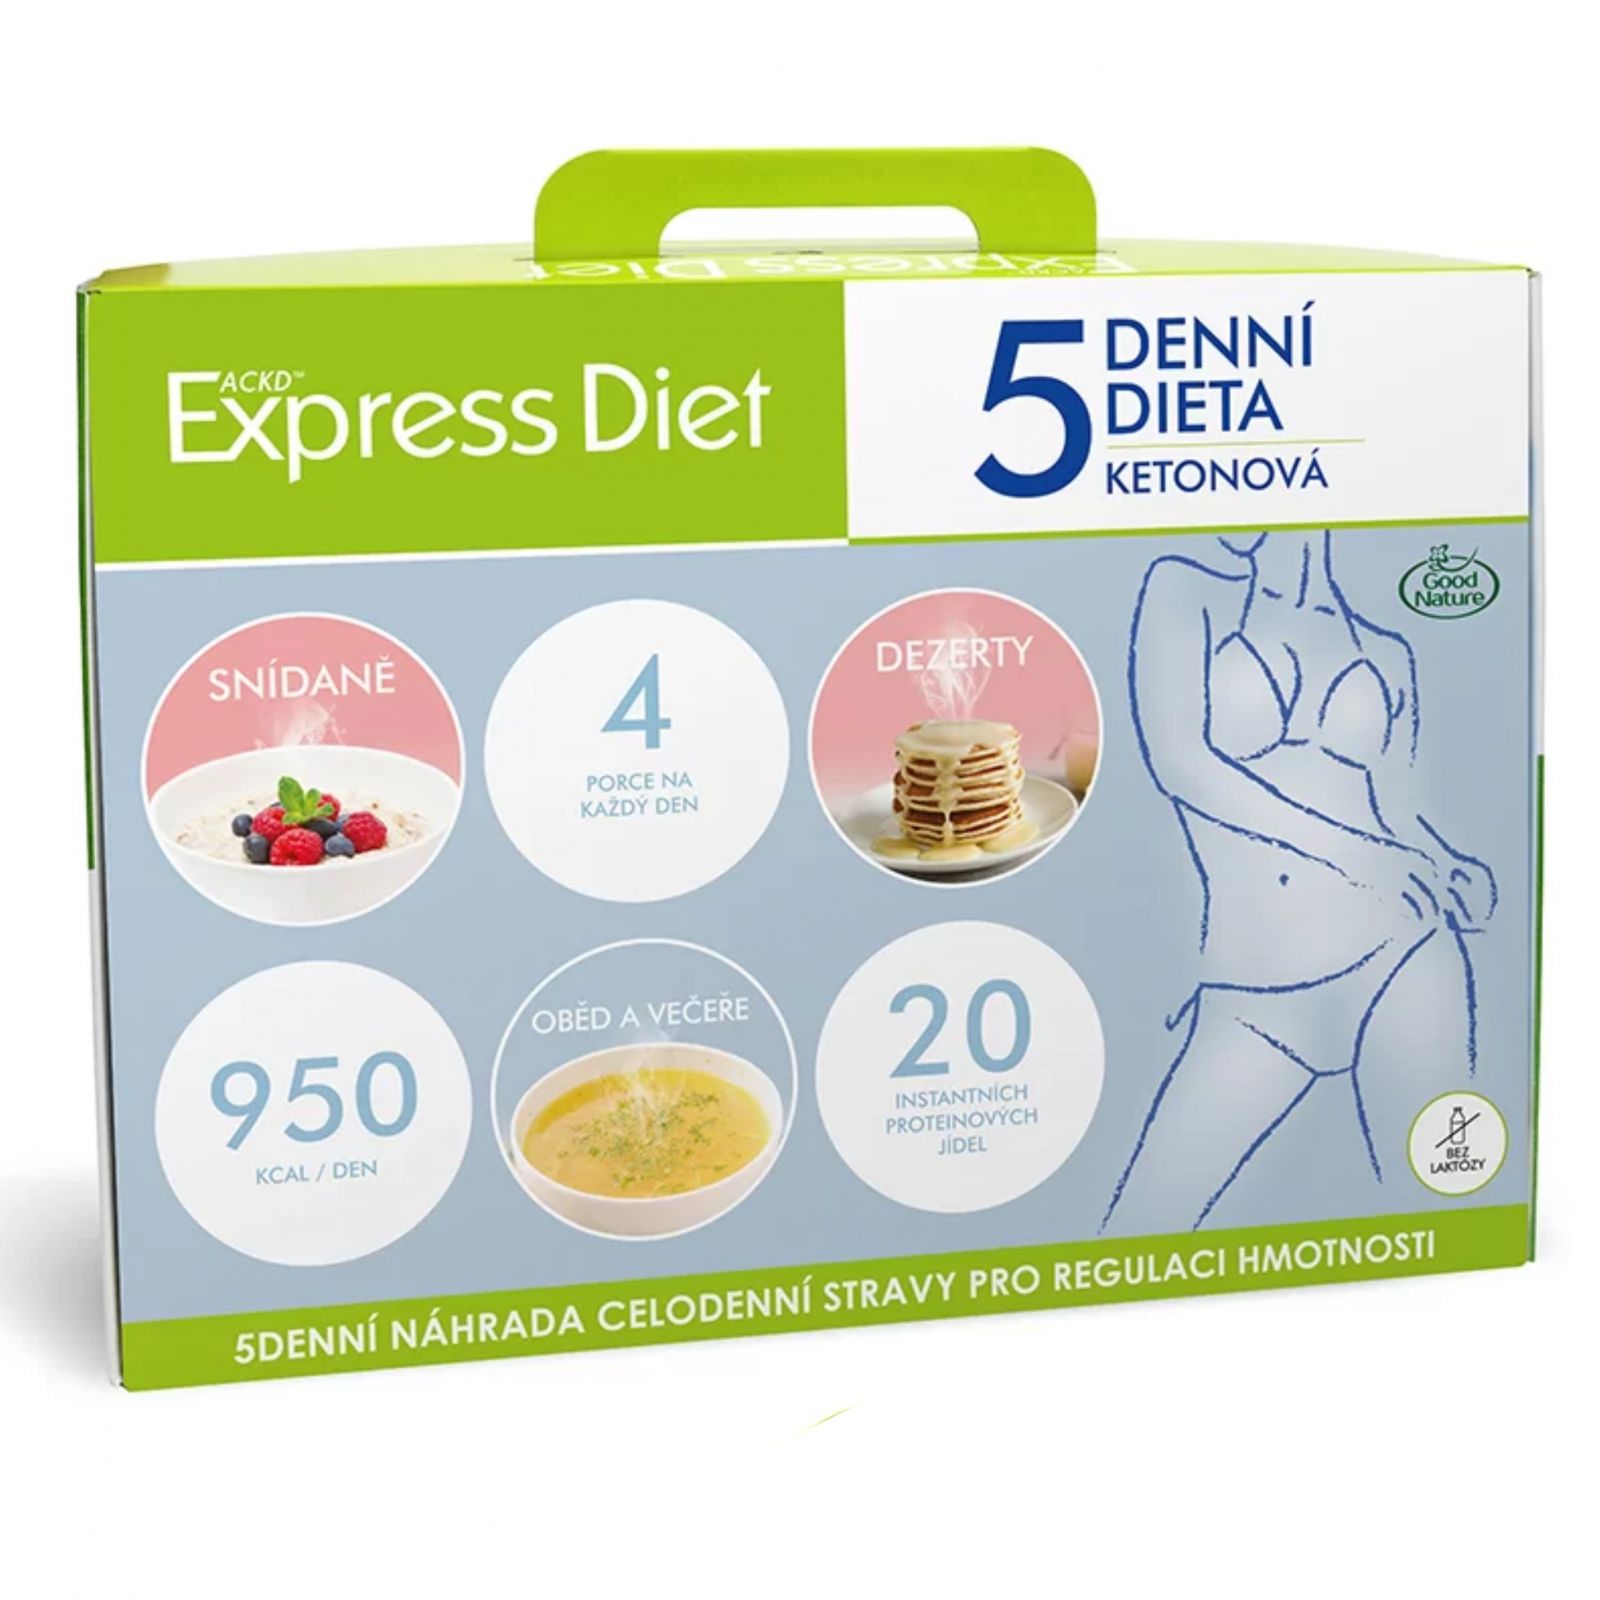 Good Nature Express Diet 5denní ketonová dieta